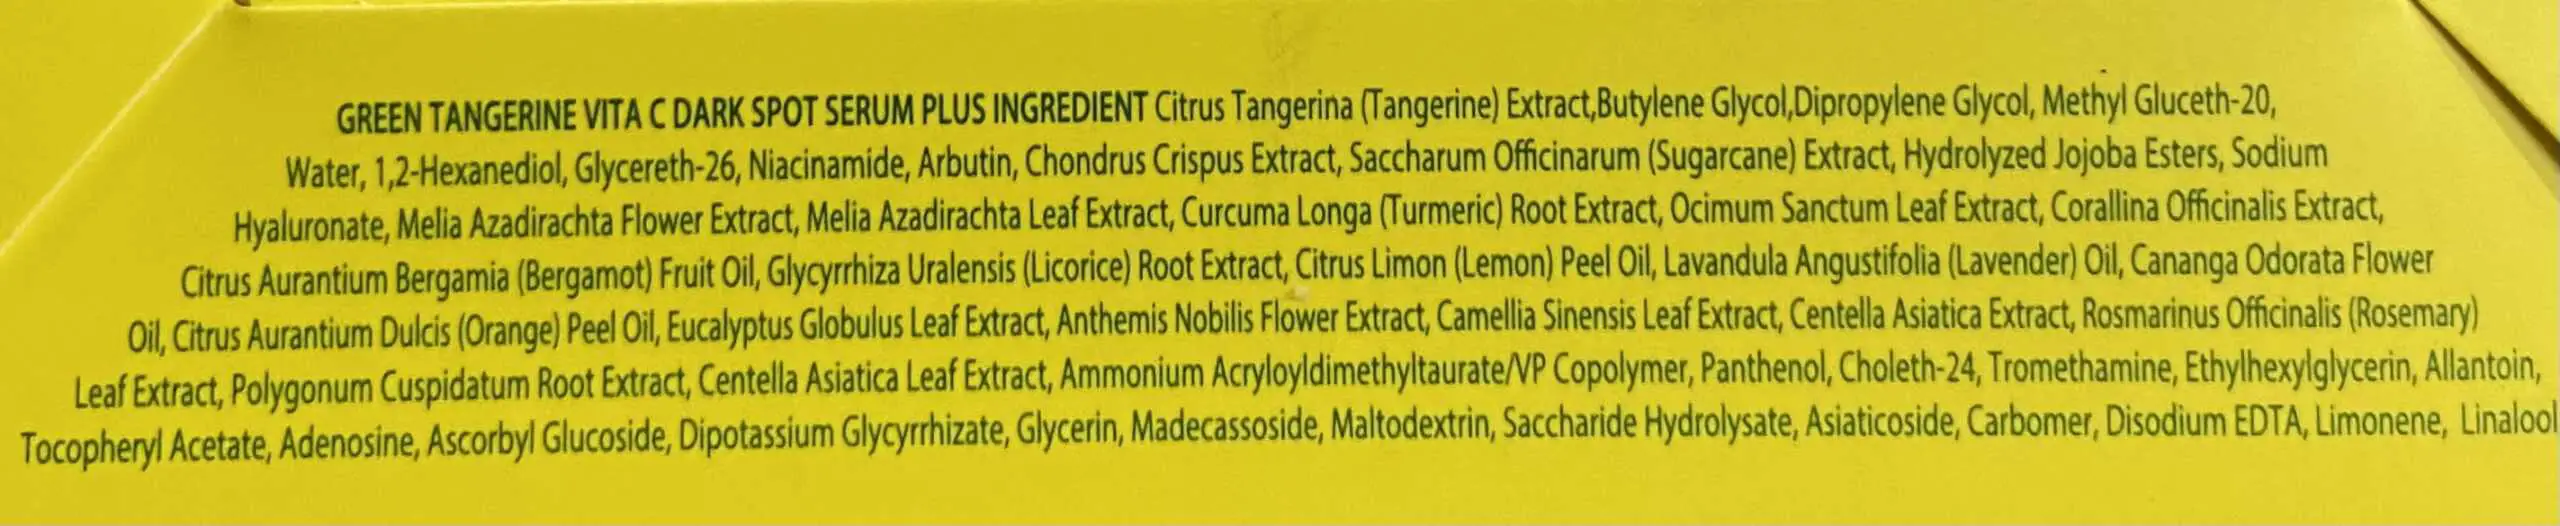 Goodal Green Tangerine Vita C Dark Spot Serum ingredients scaled